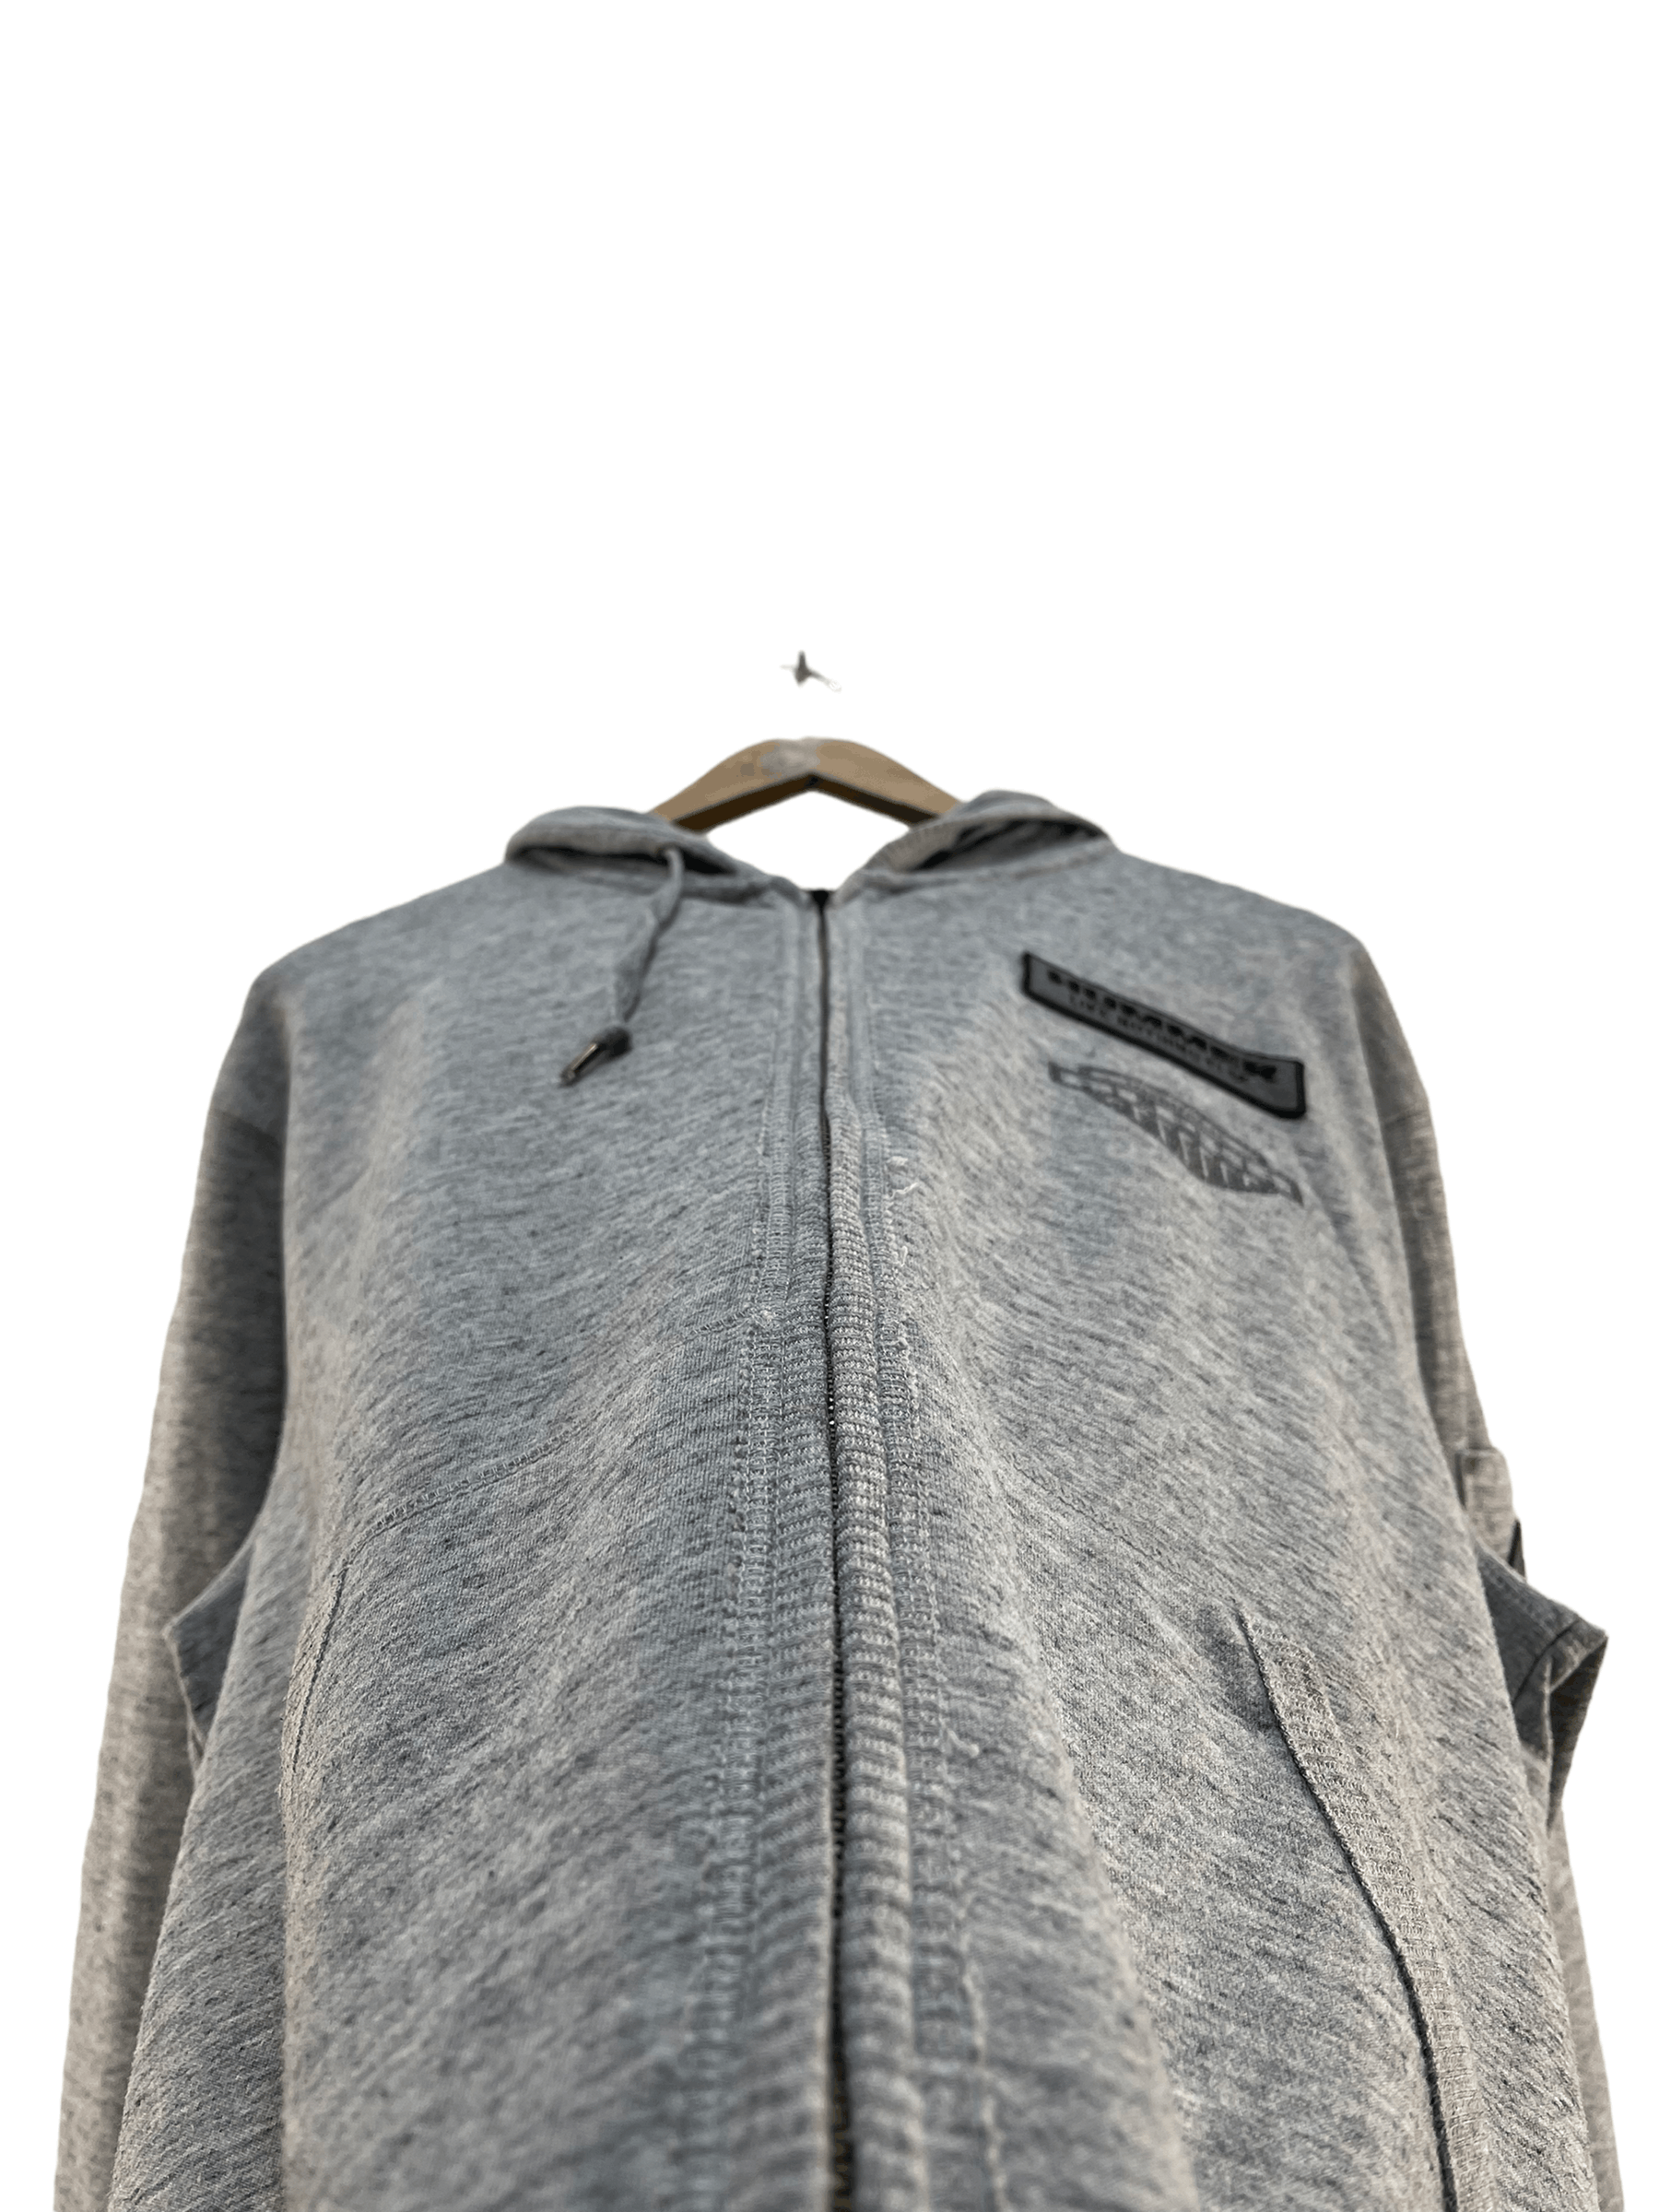 Japanese Brand Hummer Hoodies Sweater Jacket Size US L / EU 52-54 / 3 - 8 Thumbnail